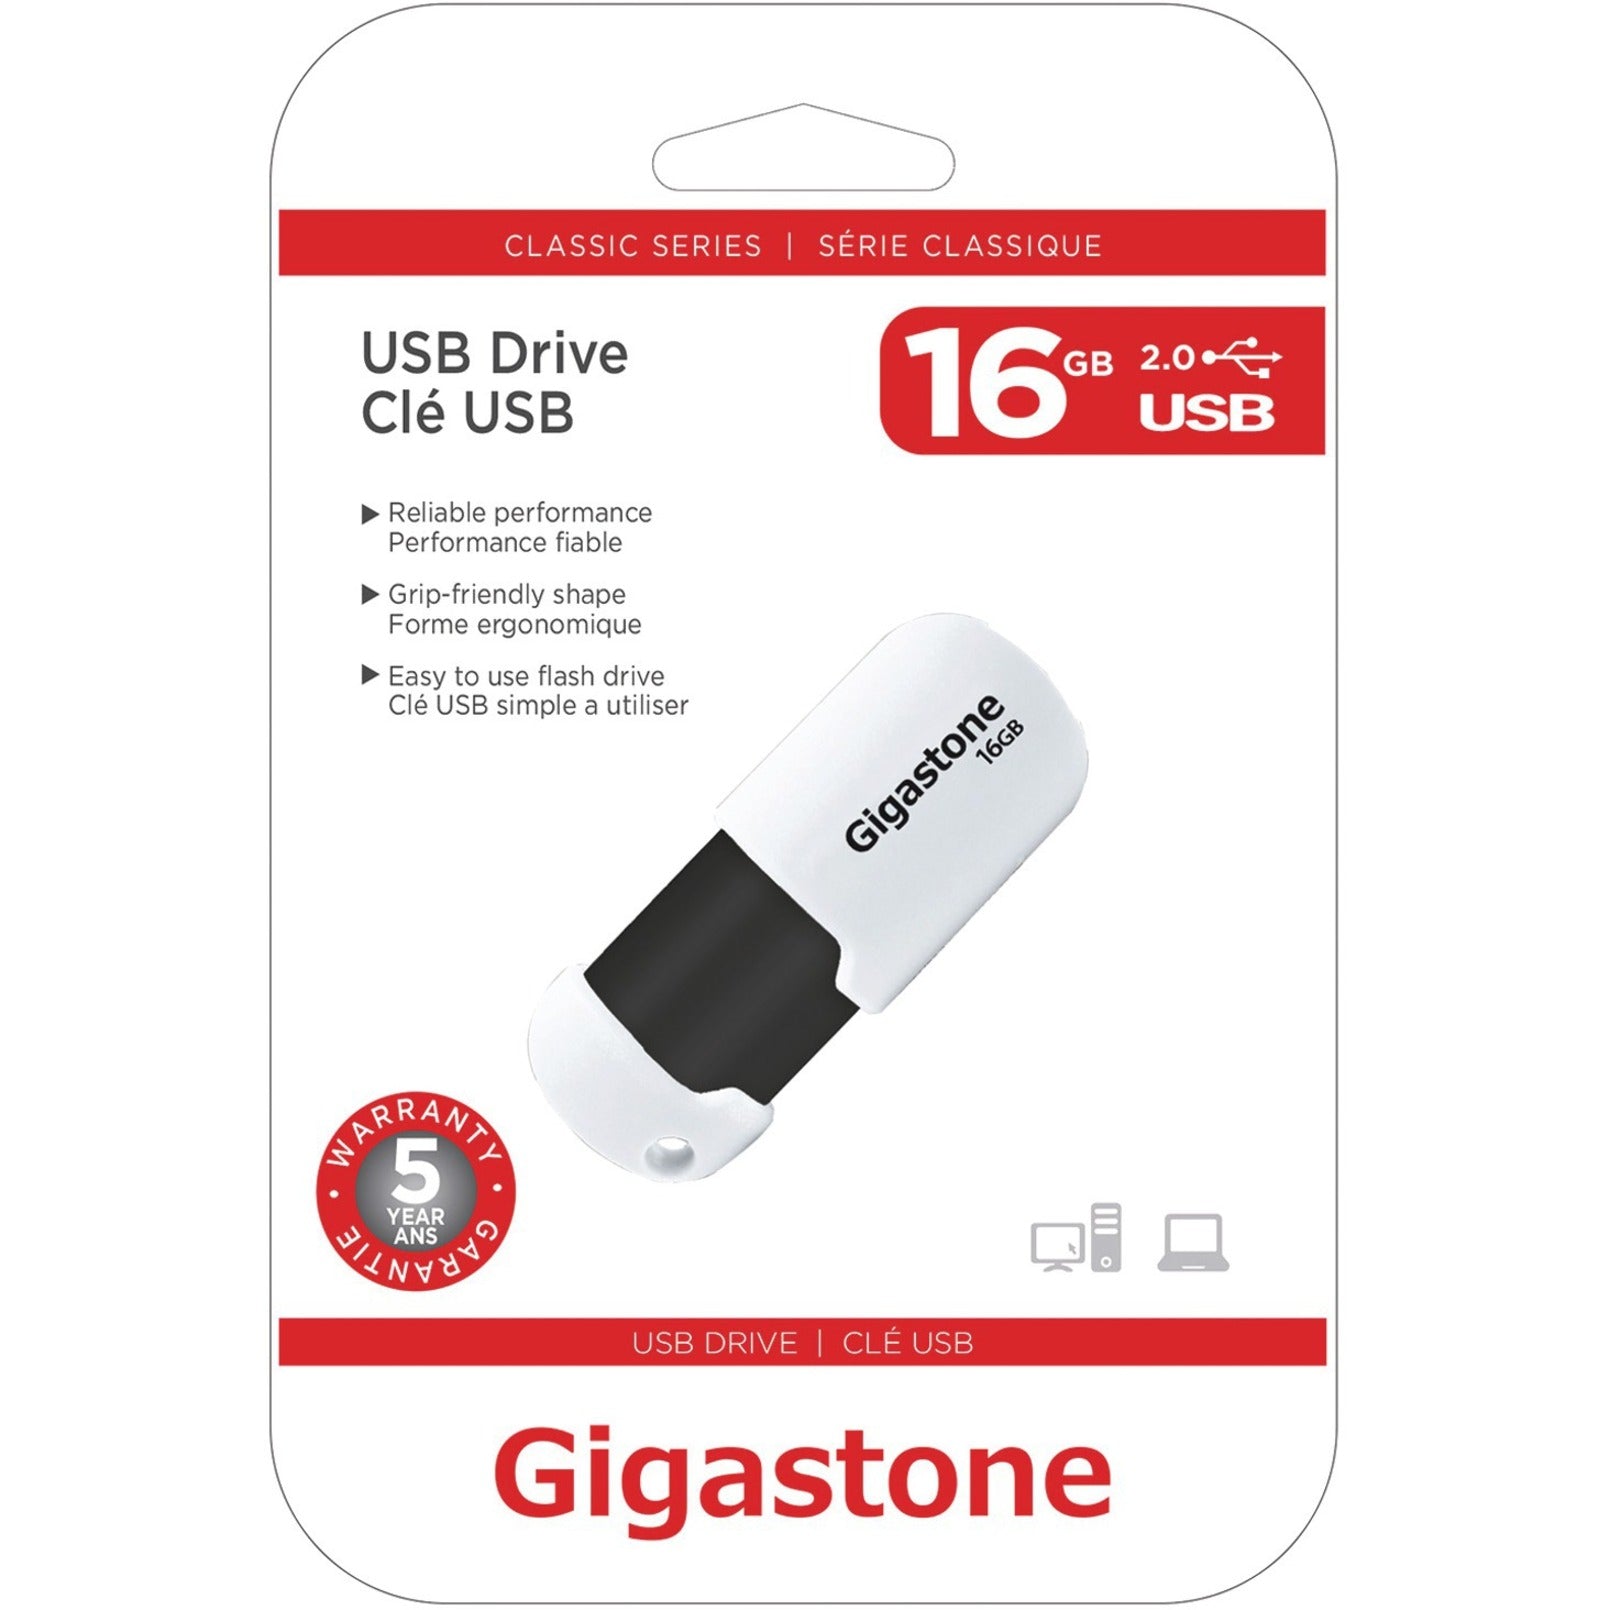 Gigastone GS-Z16GCNBL-R 16GB Classic USB 2.0 Flash Drive, 5 Year Warranty, Retail Package